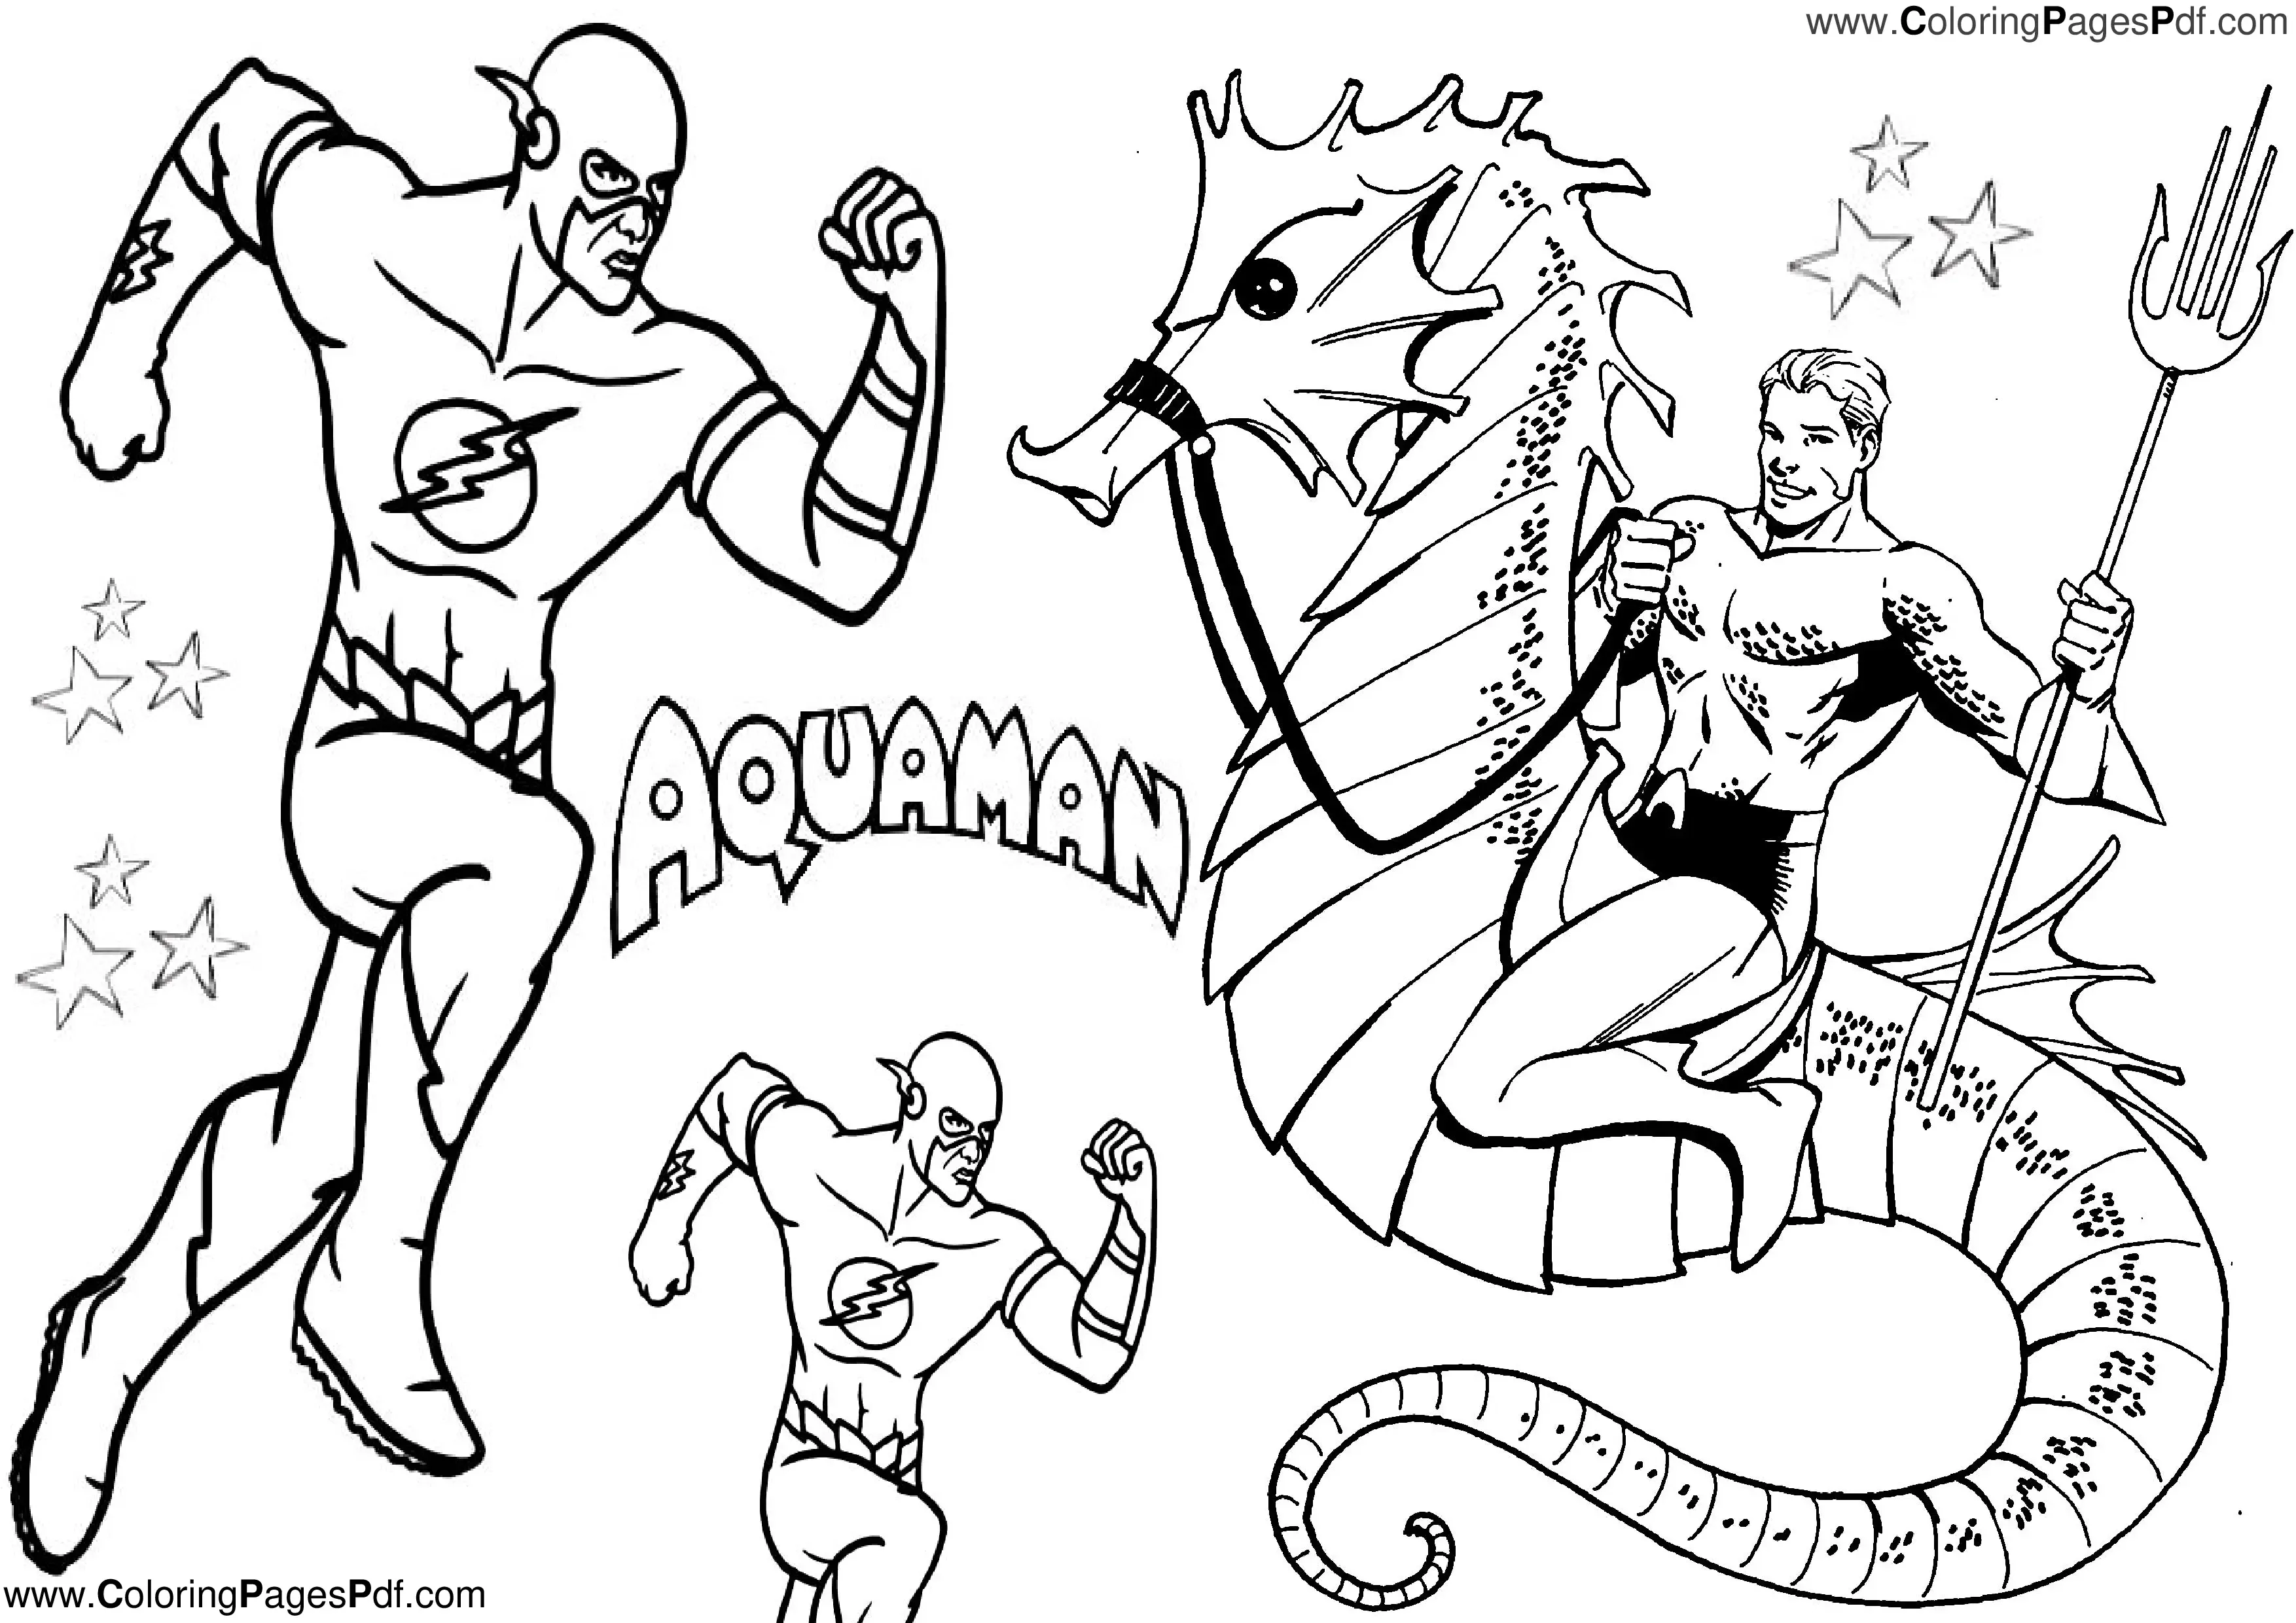 Flash & Aquaman coloring pages